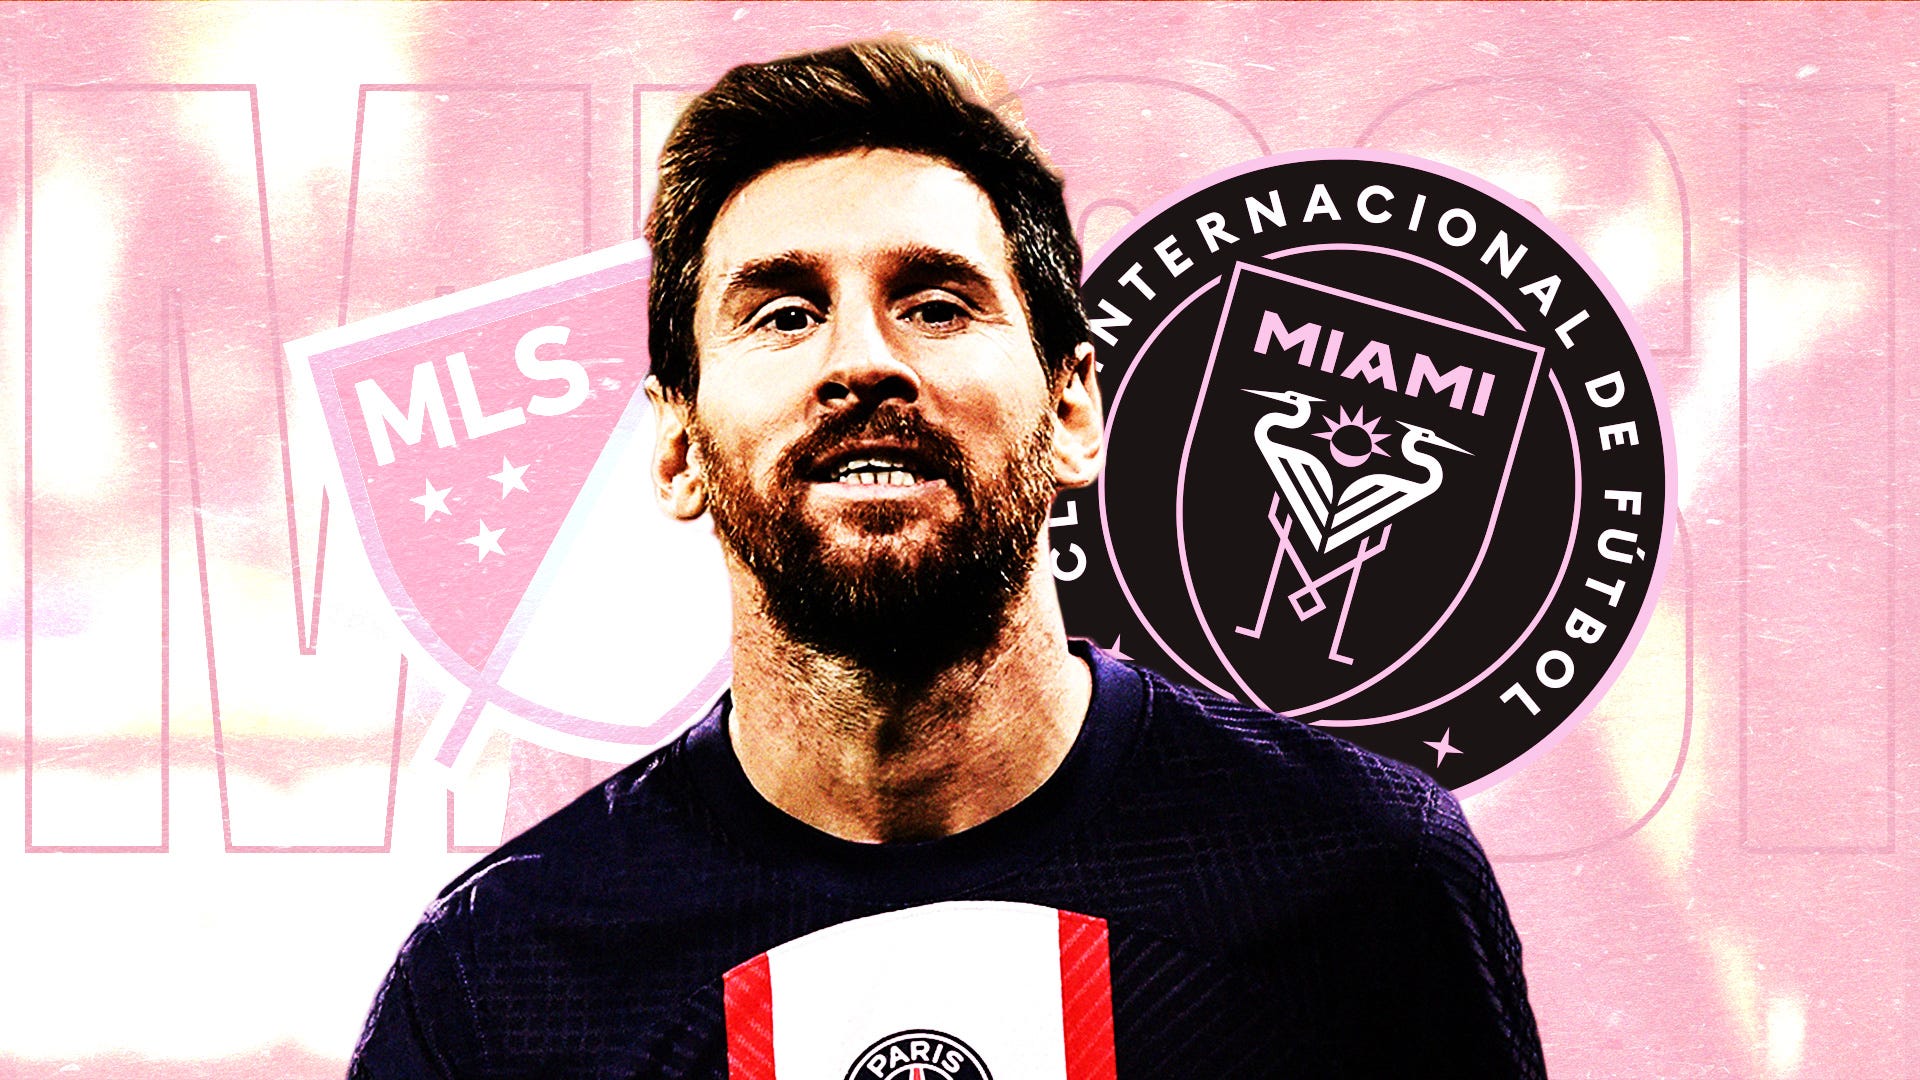 Messi "deshoja la margarita" sobre su futuro